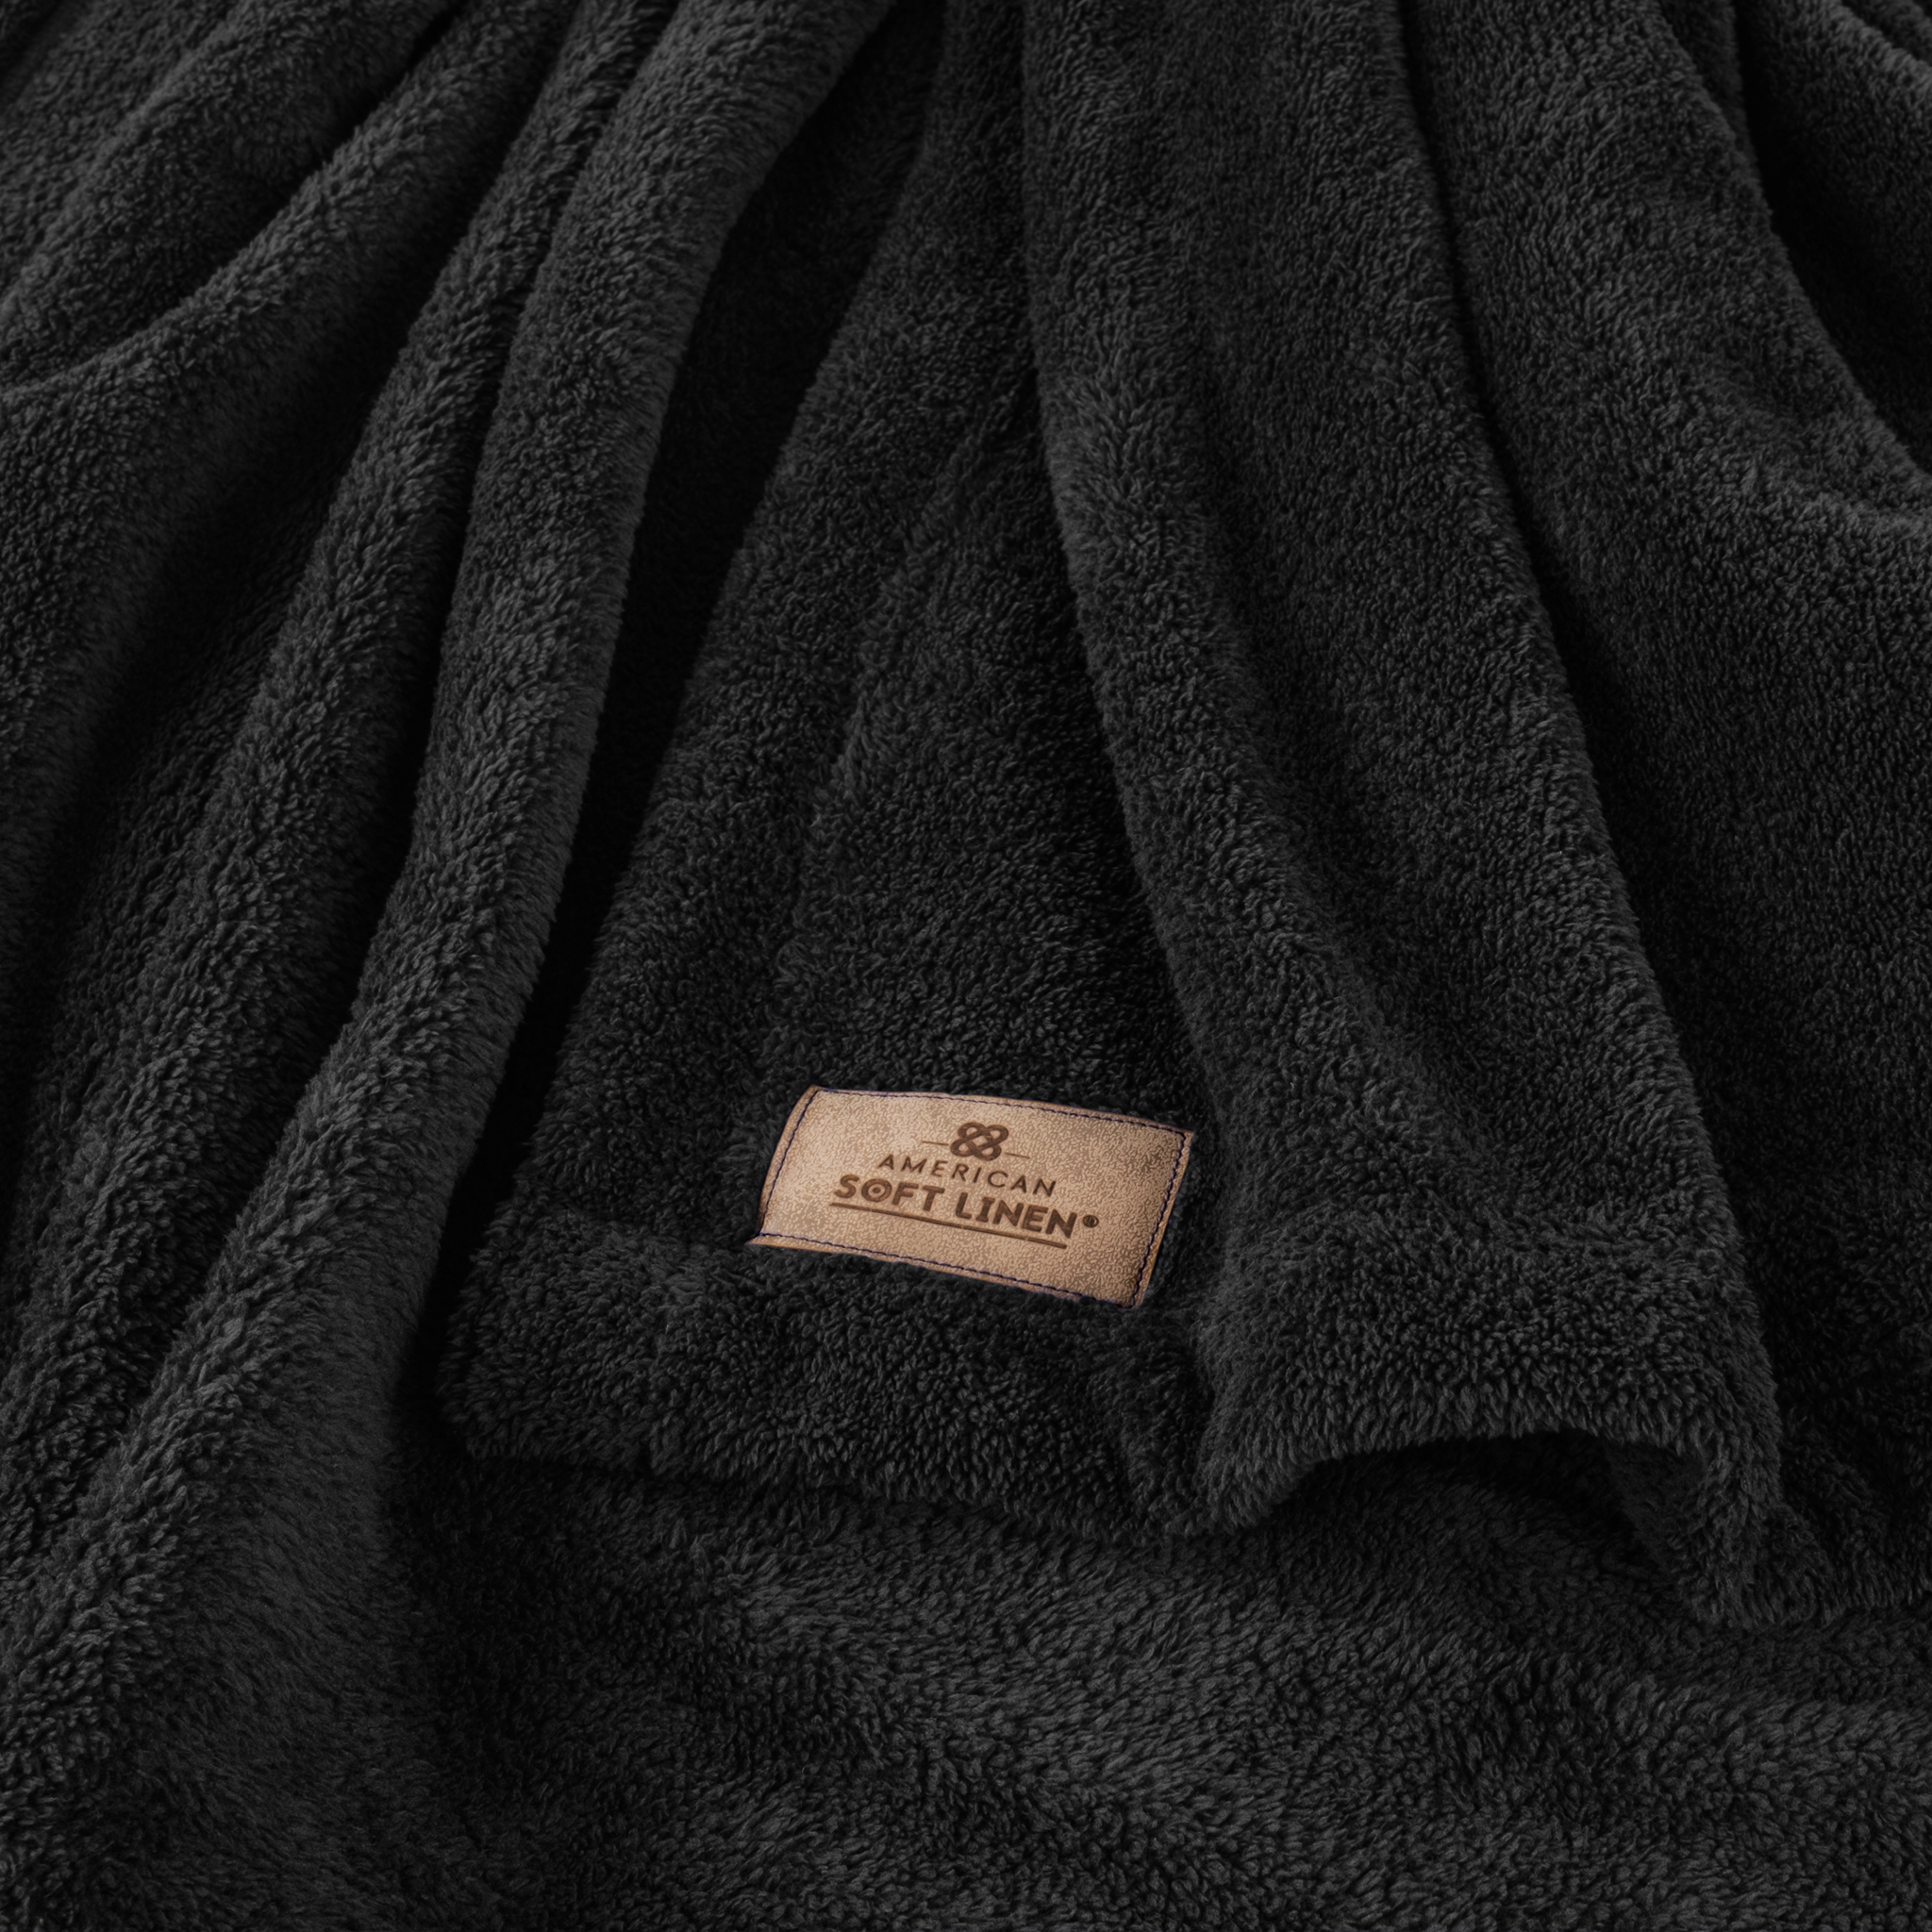 American Soft Linen - Bedding Fleece Blanket - Wholesale - 15 Set Case Pack - Twin Size 60x80 inches - Black - 4